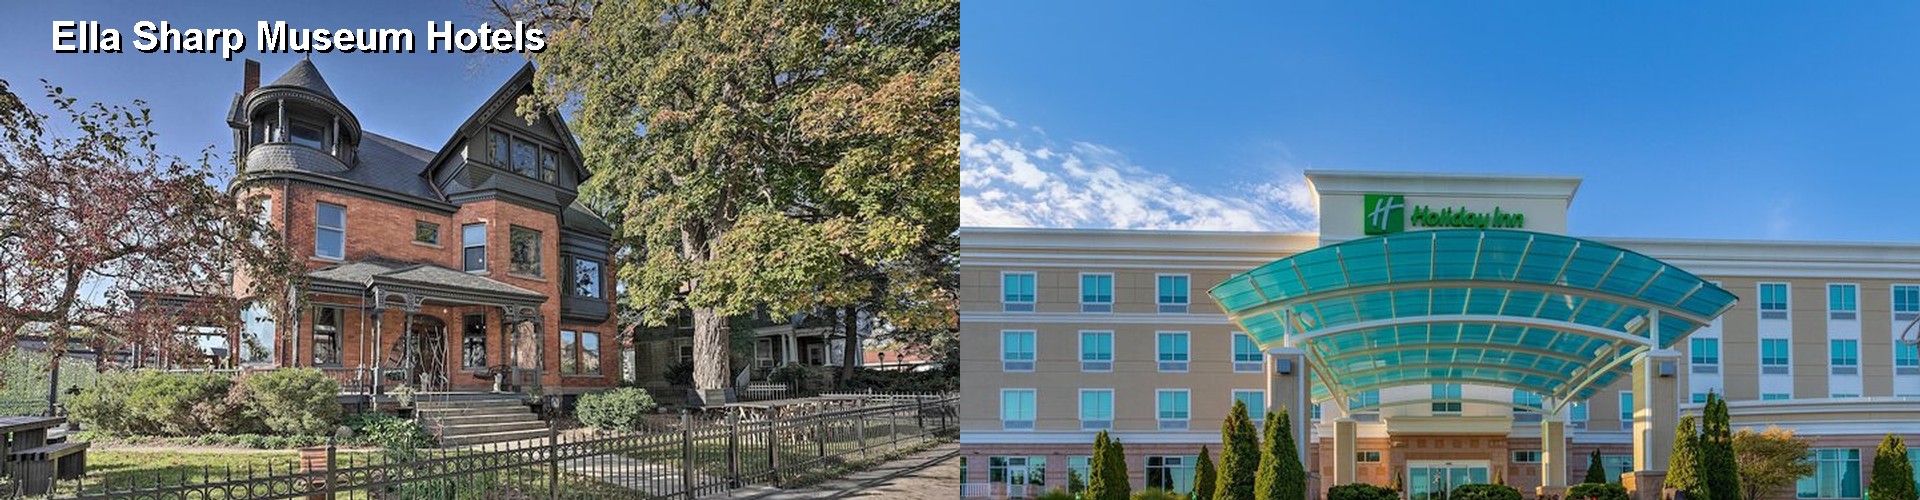 3 Best Hotels near Ella Sharp Museum